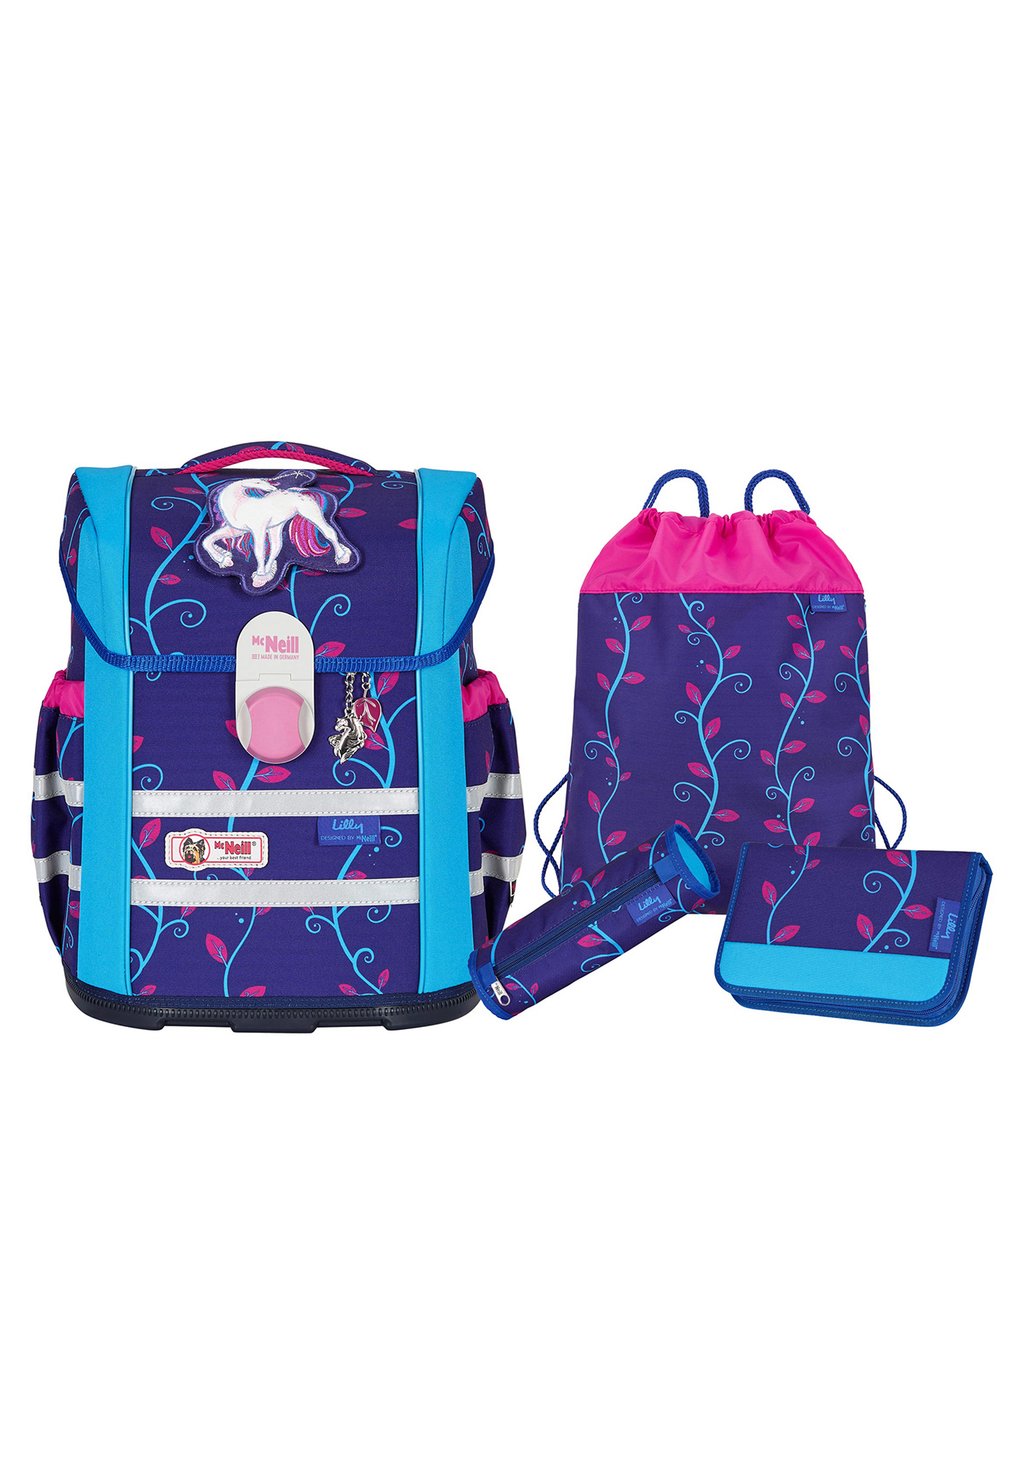 Набор школьных сумок SET 4 McNeill, цвет dark purple